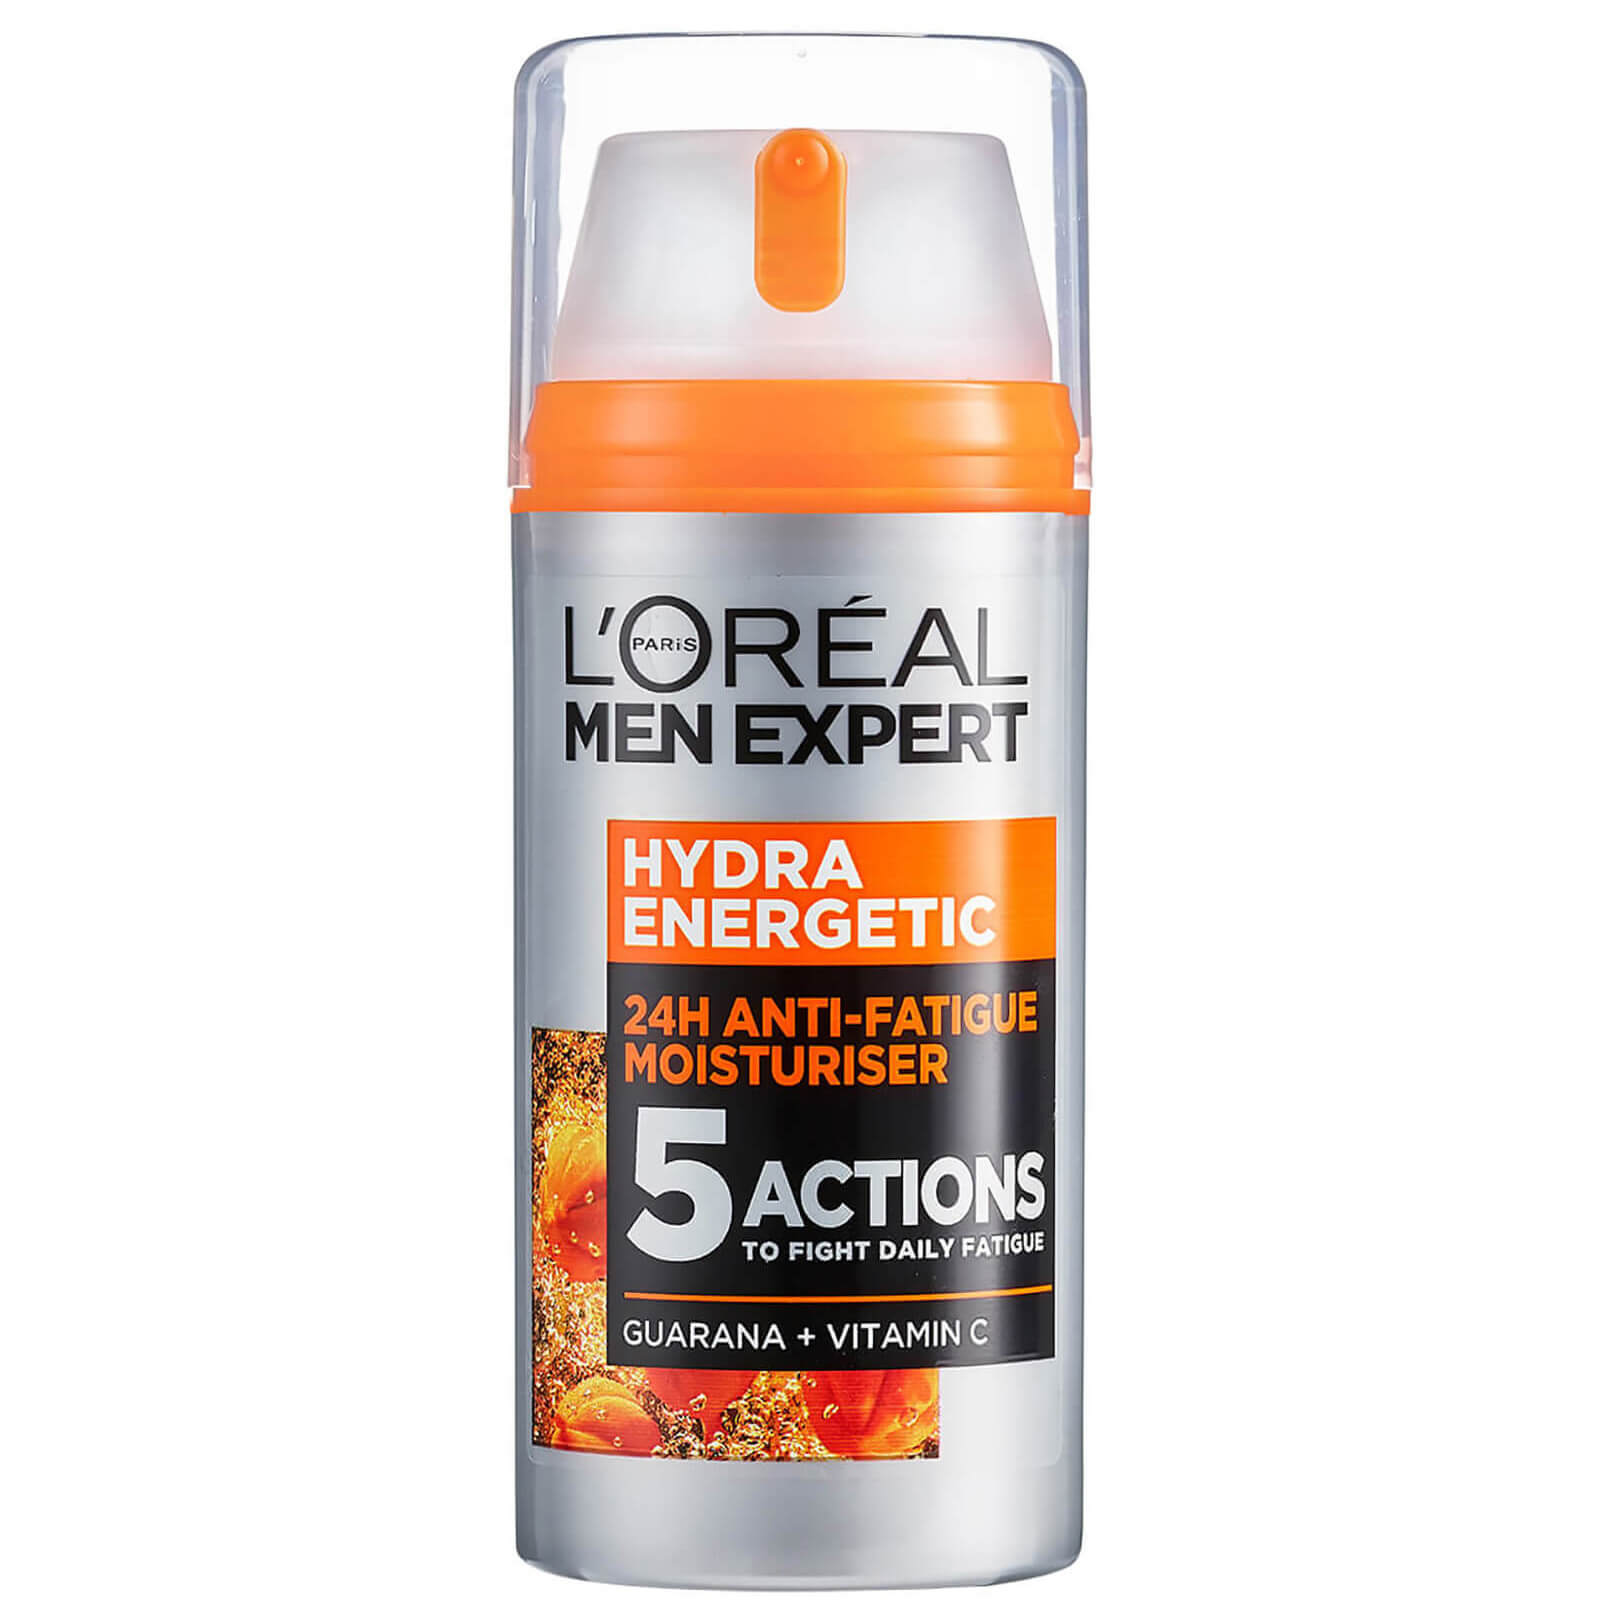 L'Oréal Men Expert Hydra Energetic Anti-Fatigue Moisturiser 100ml